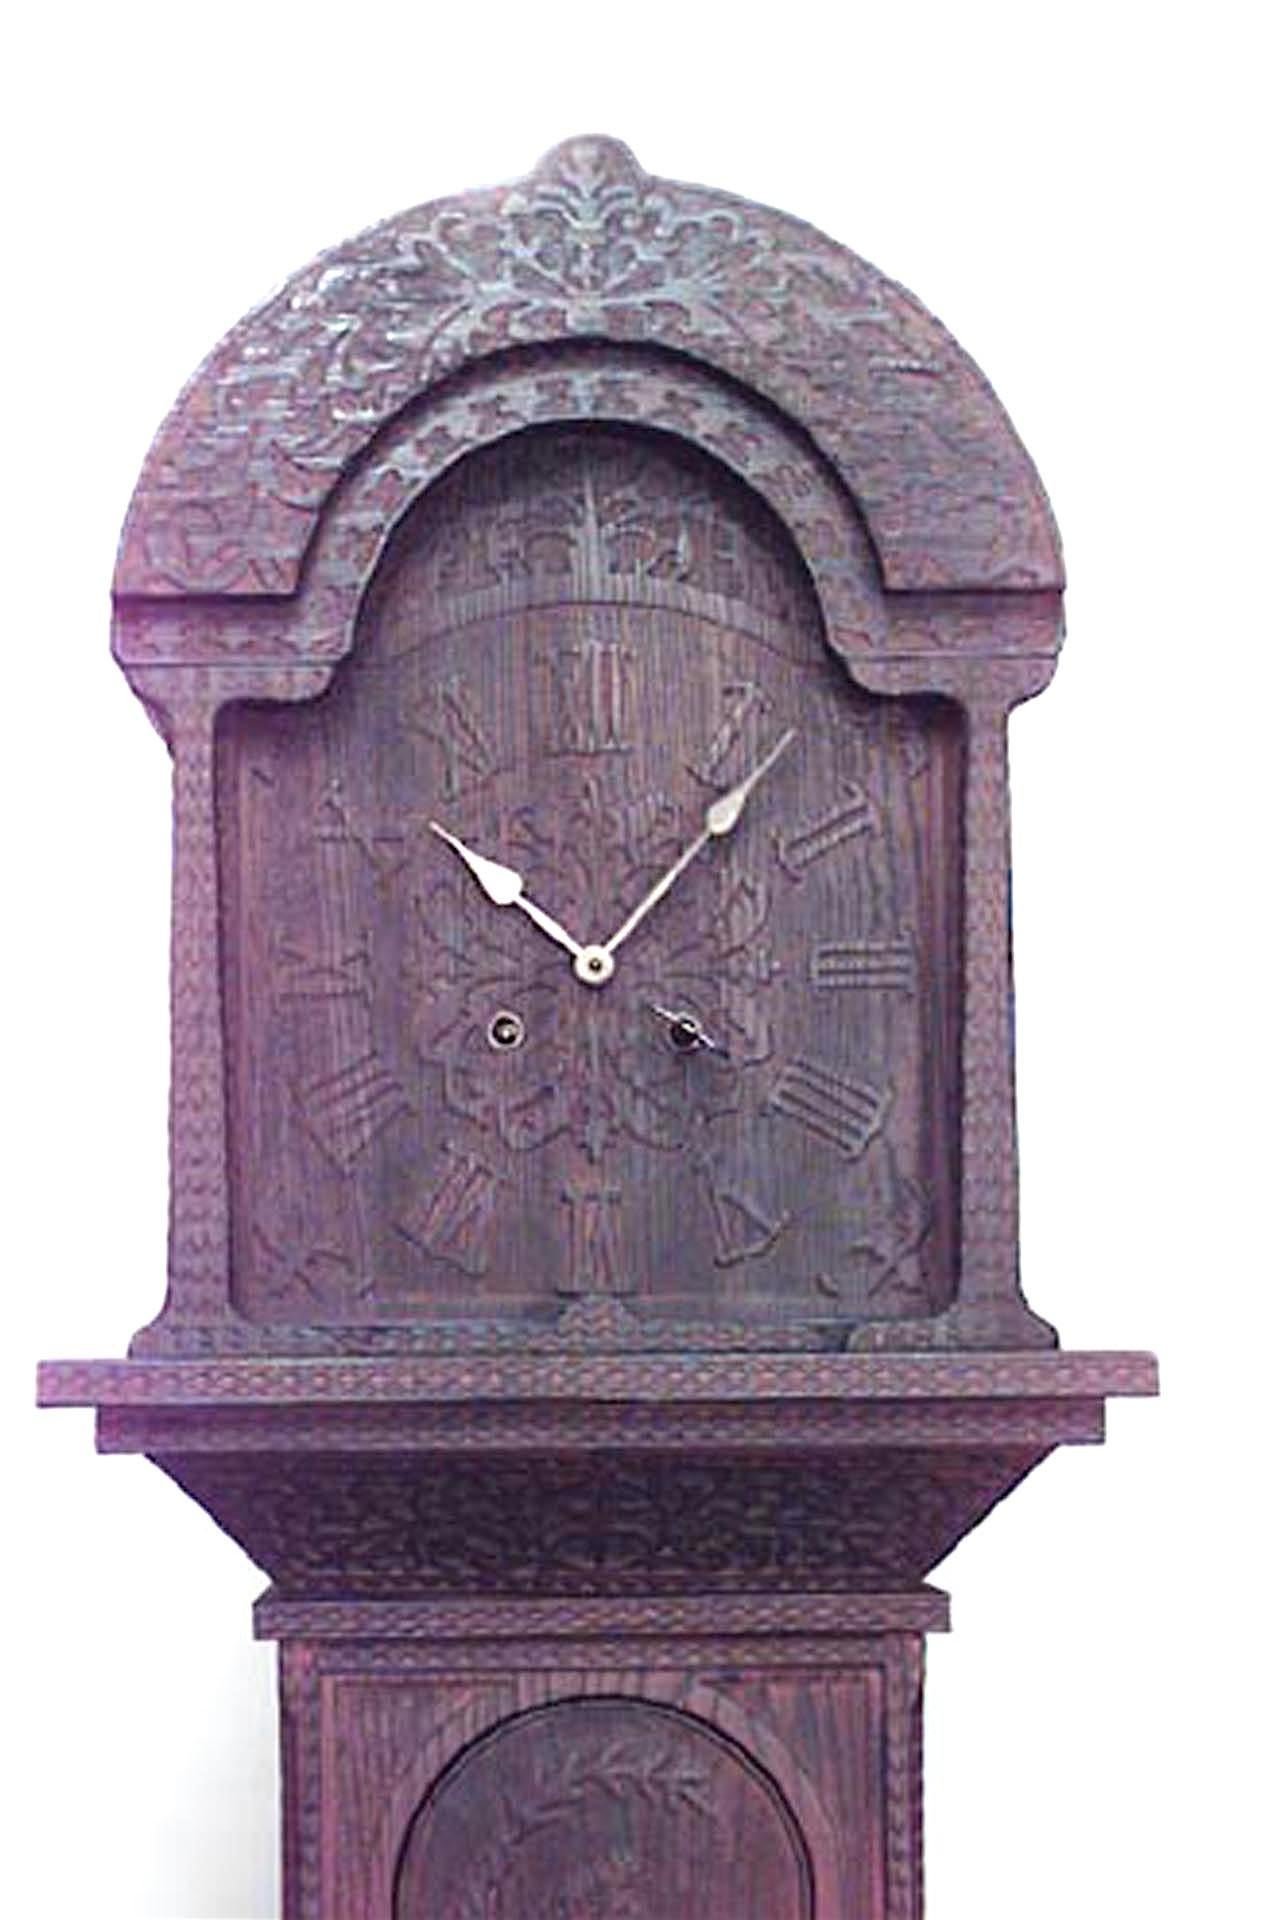 rustic grandfather clock